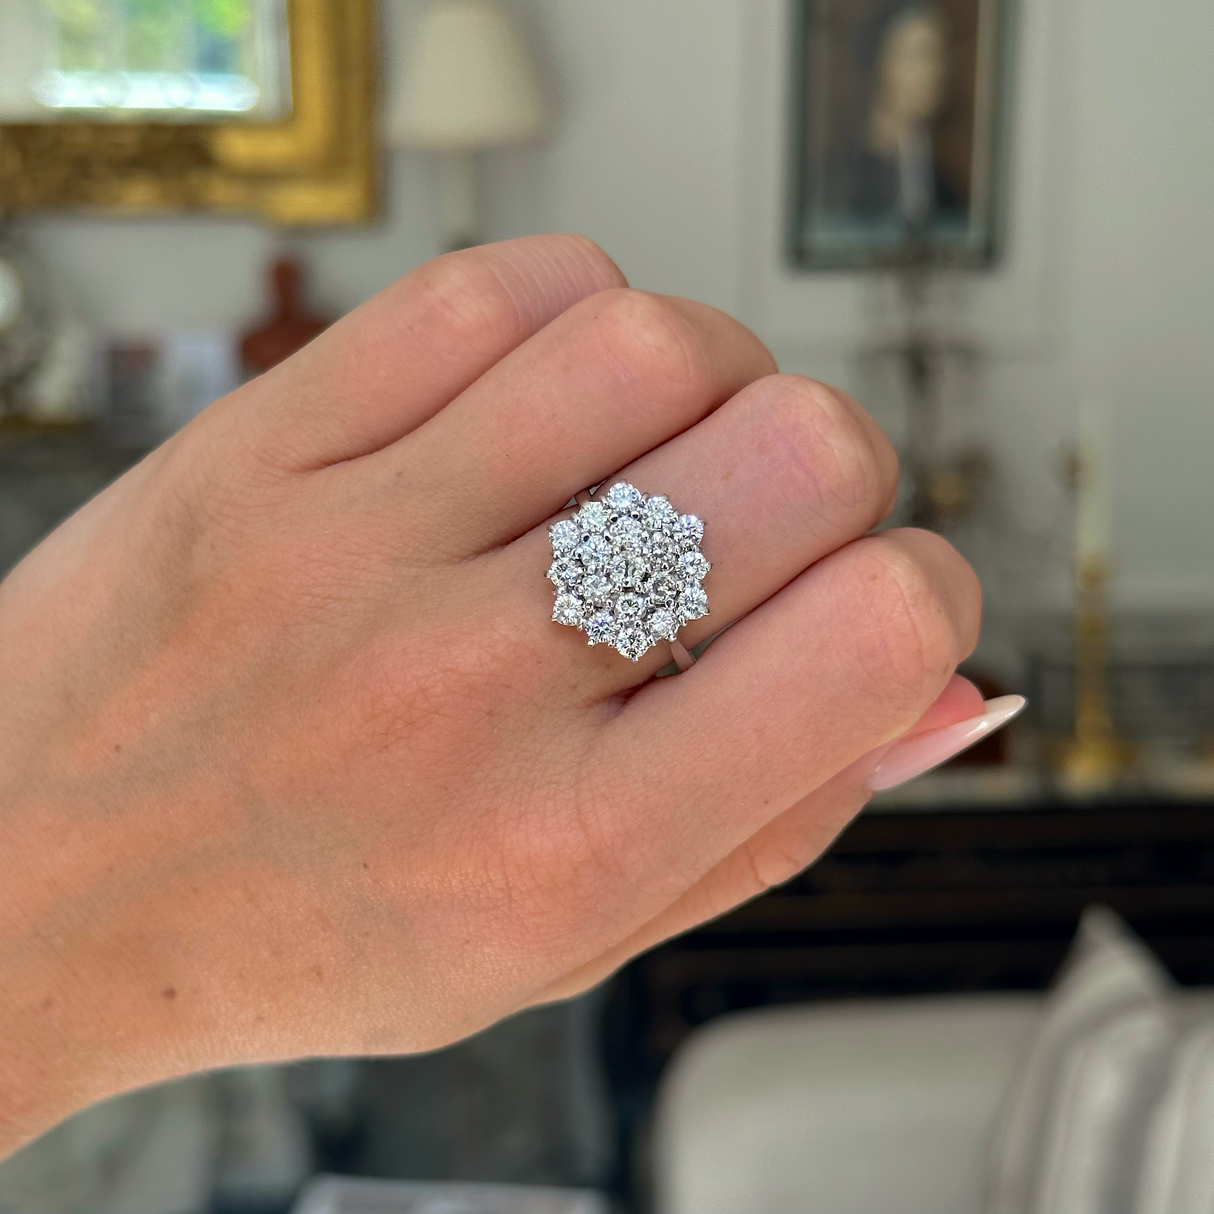 Vintage, large diamond cluster ring worn on closed hand.